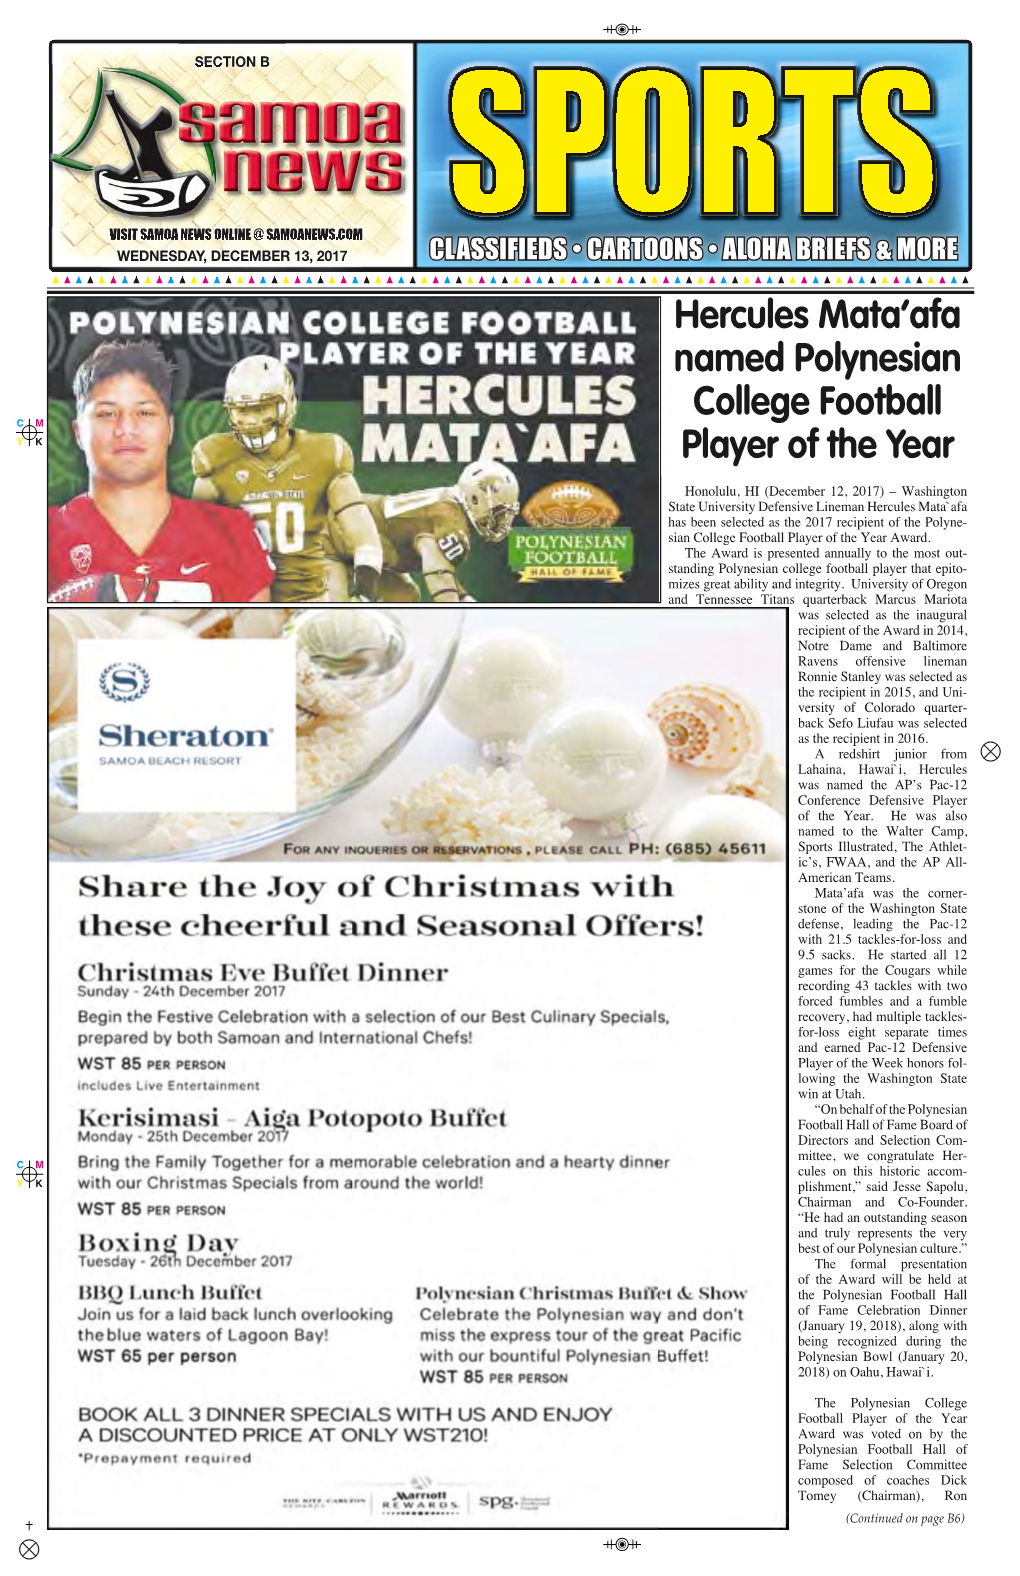 Hercules Mata'afa Named Polynesian College Football Player of the Year